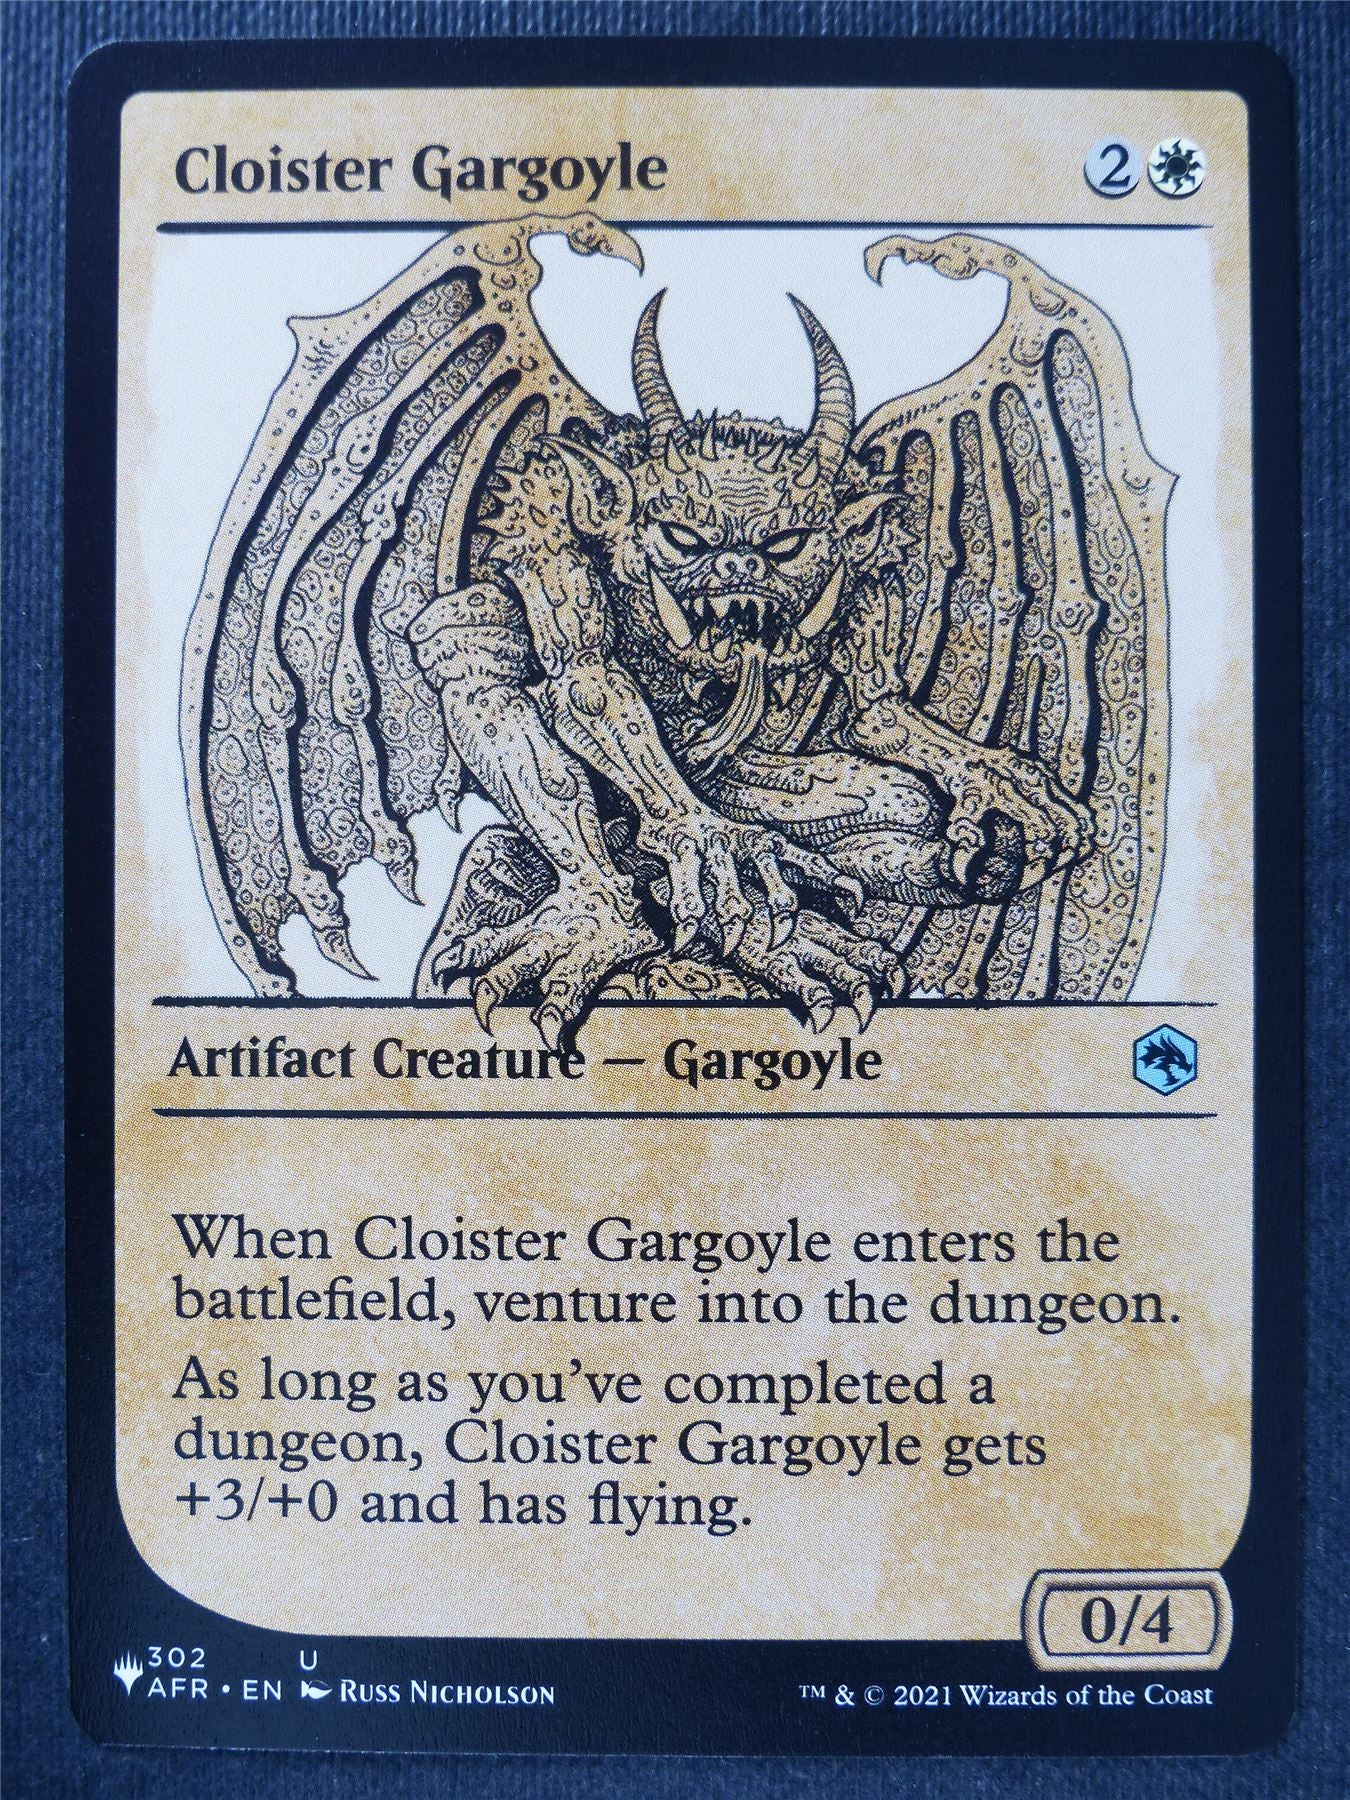 Cloister Gargoyle module art - The List - Mtg Card #2CL